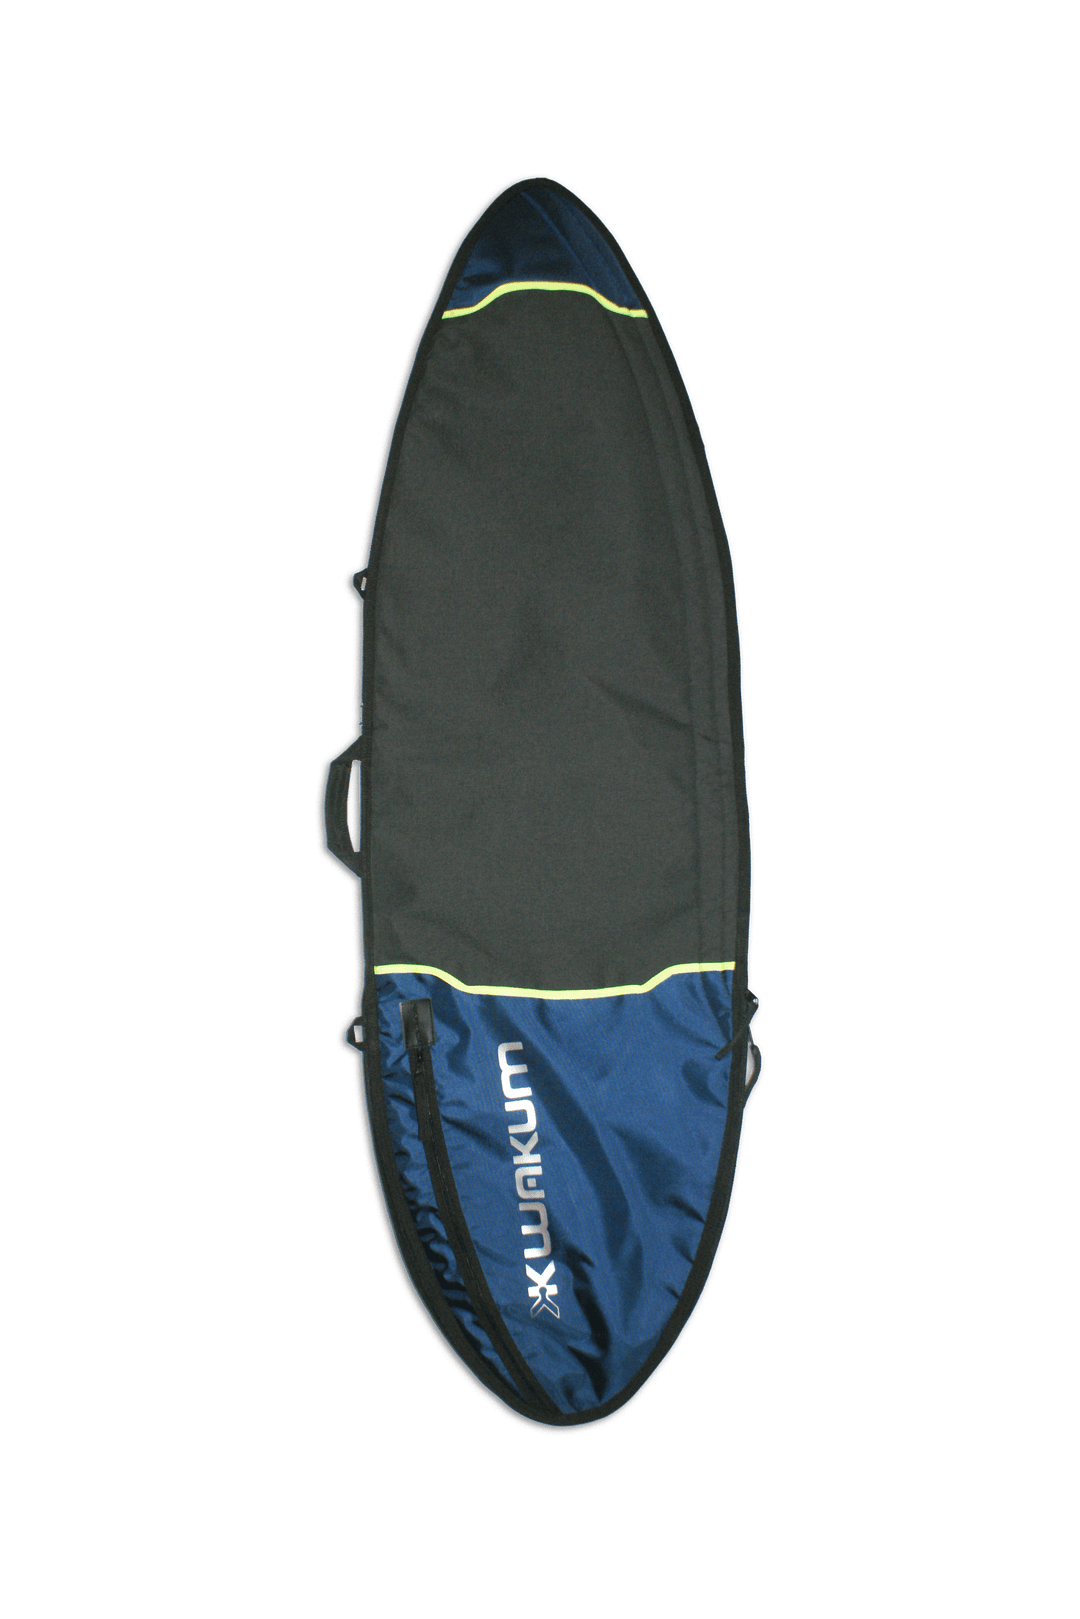 Wakum Supreme kitewave - Orca Sports